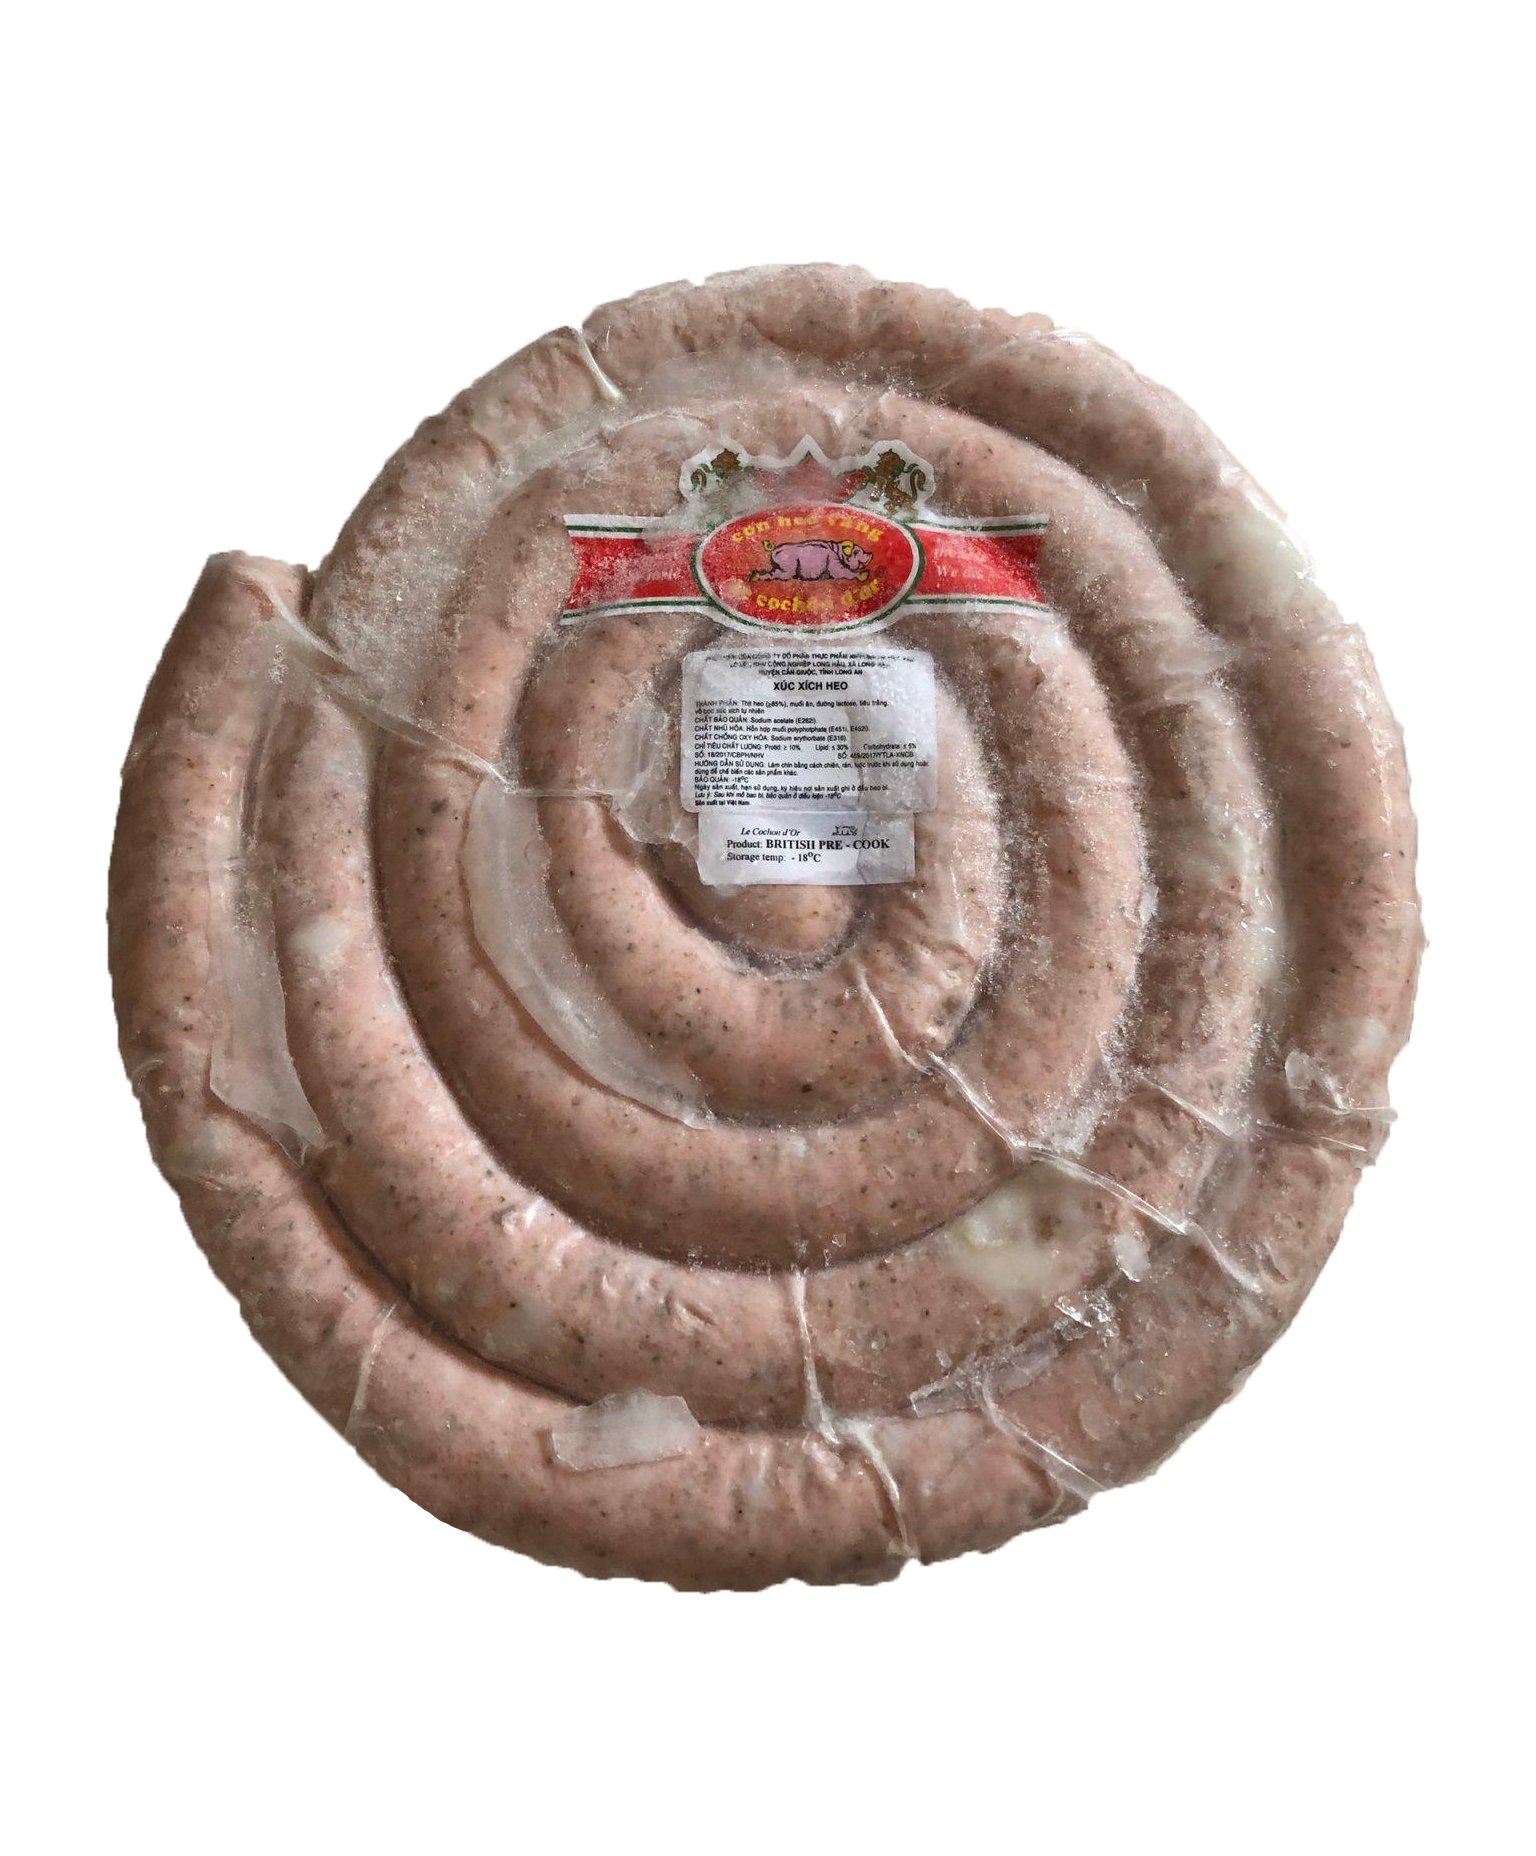 xuc-xich-anh-nau-cuon-2m-british-sausage-recook-british-banger